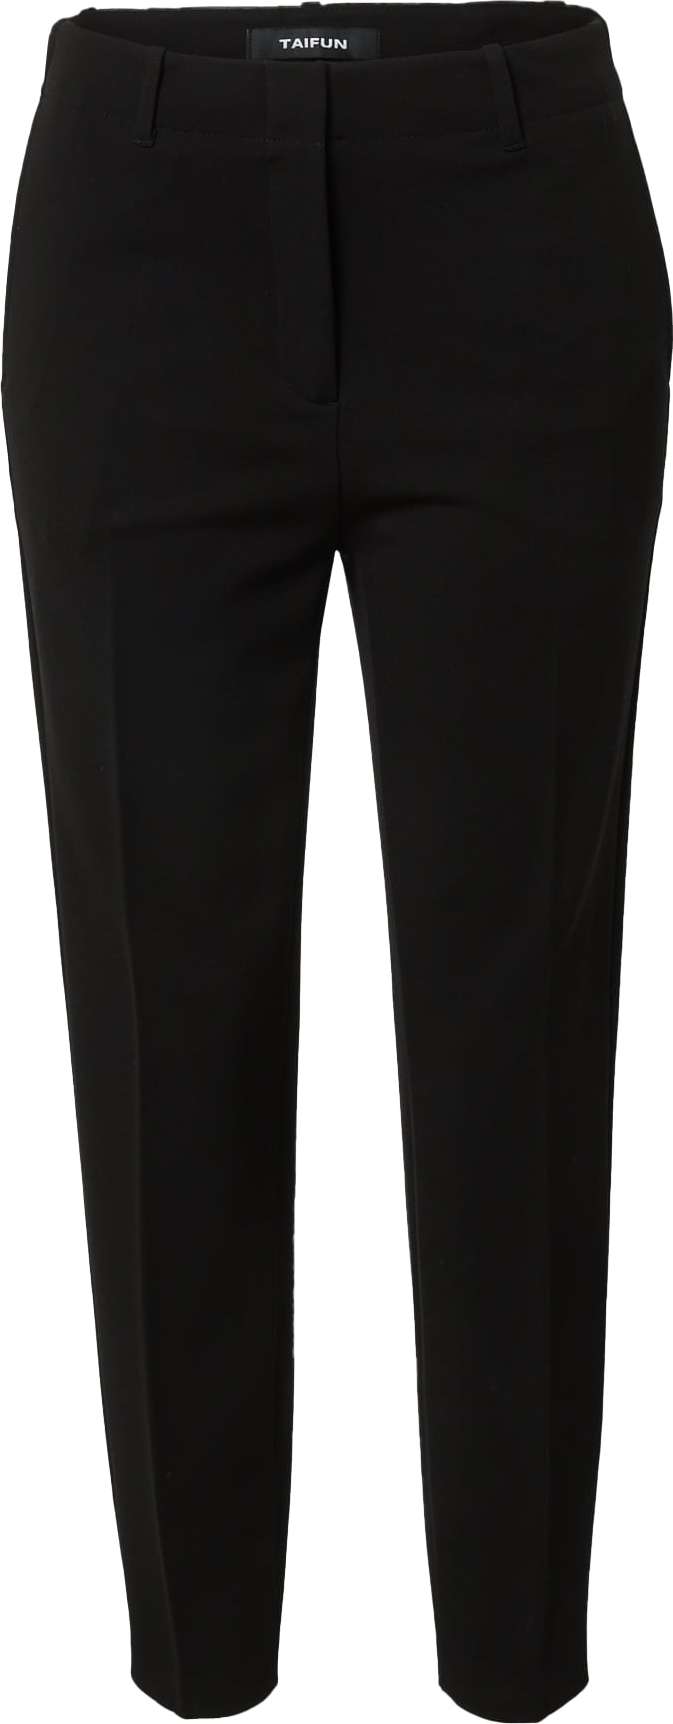 TAIFUN Kalhoty s puky černá